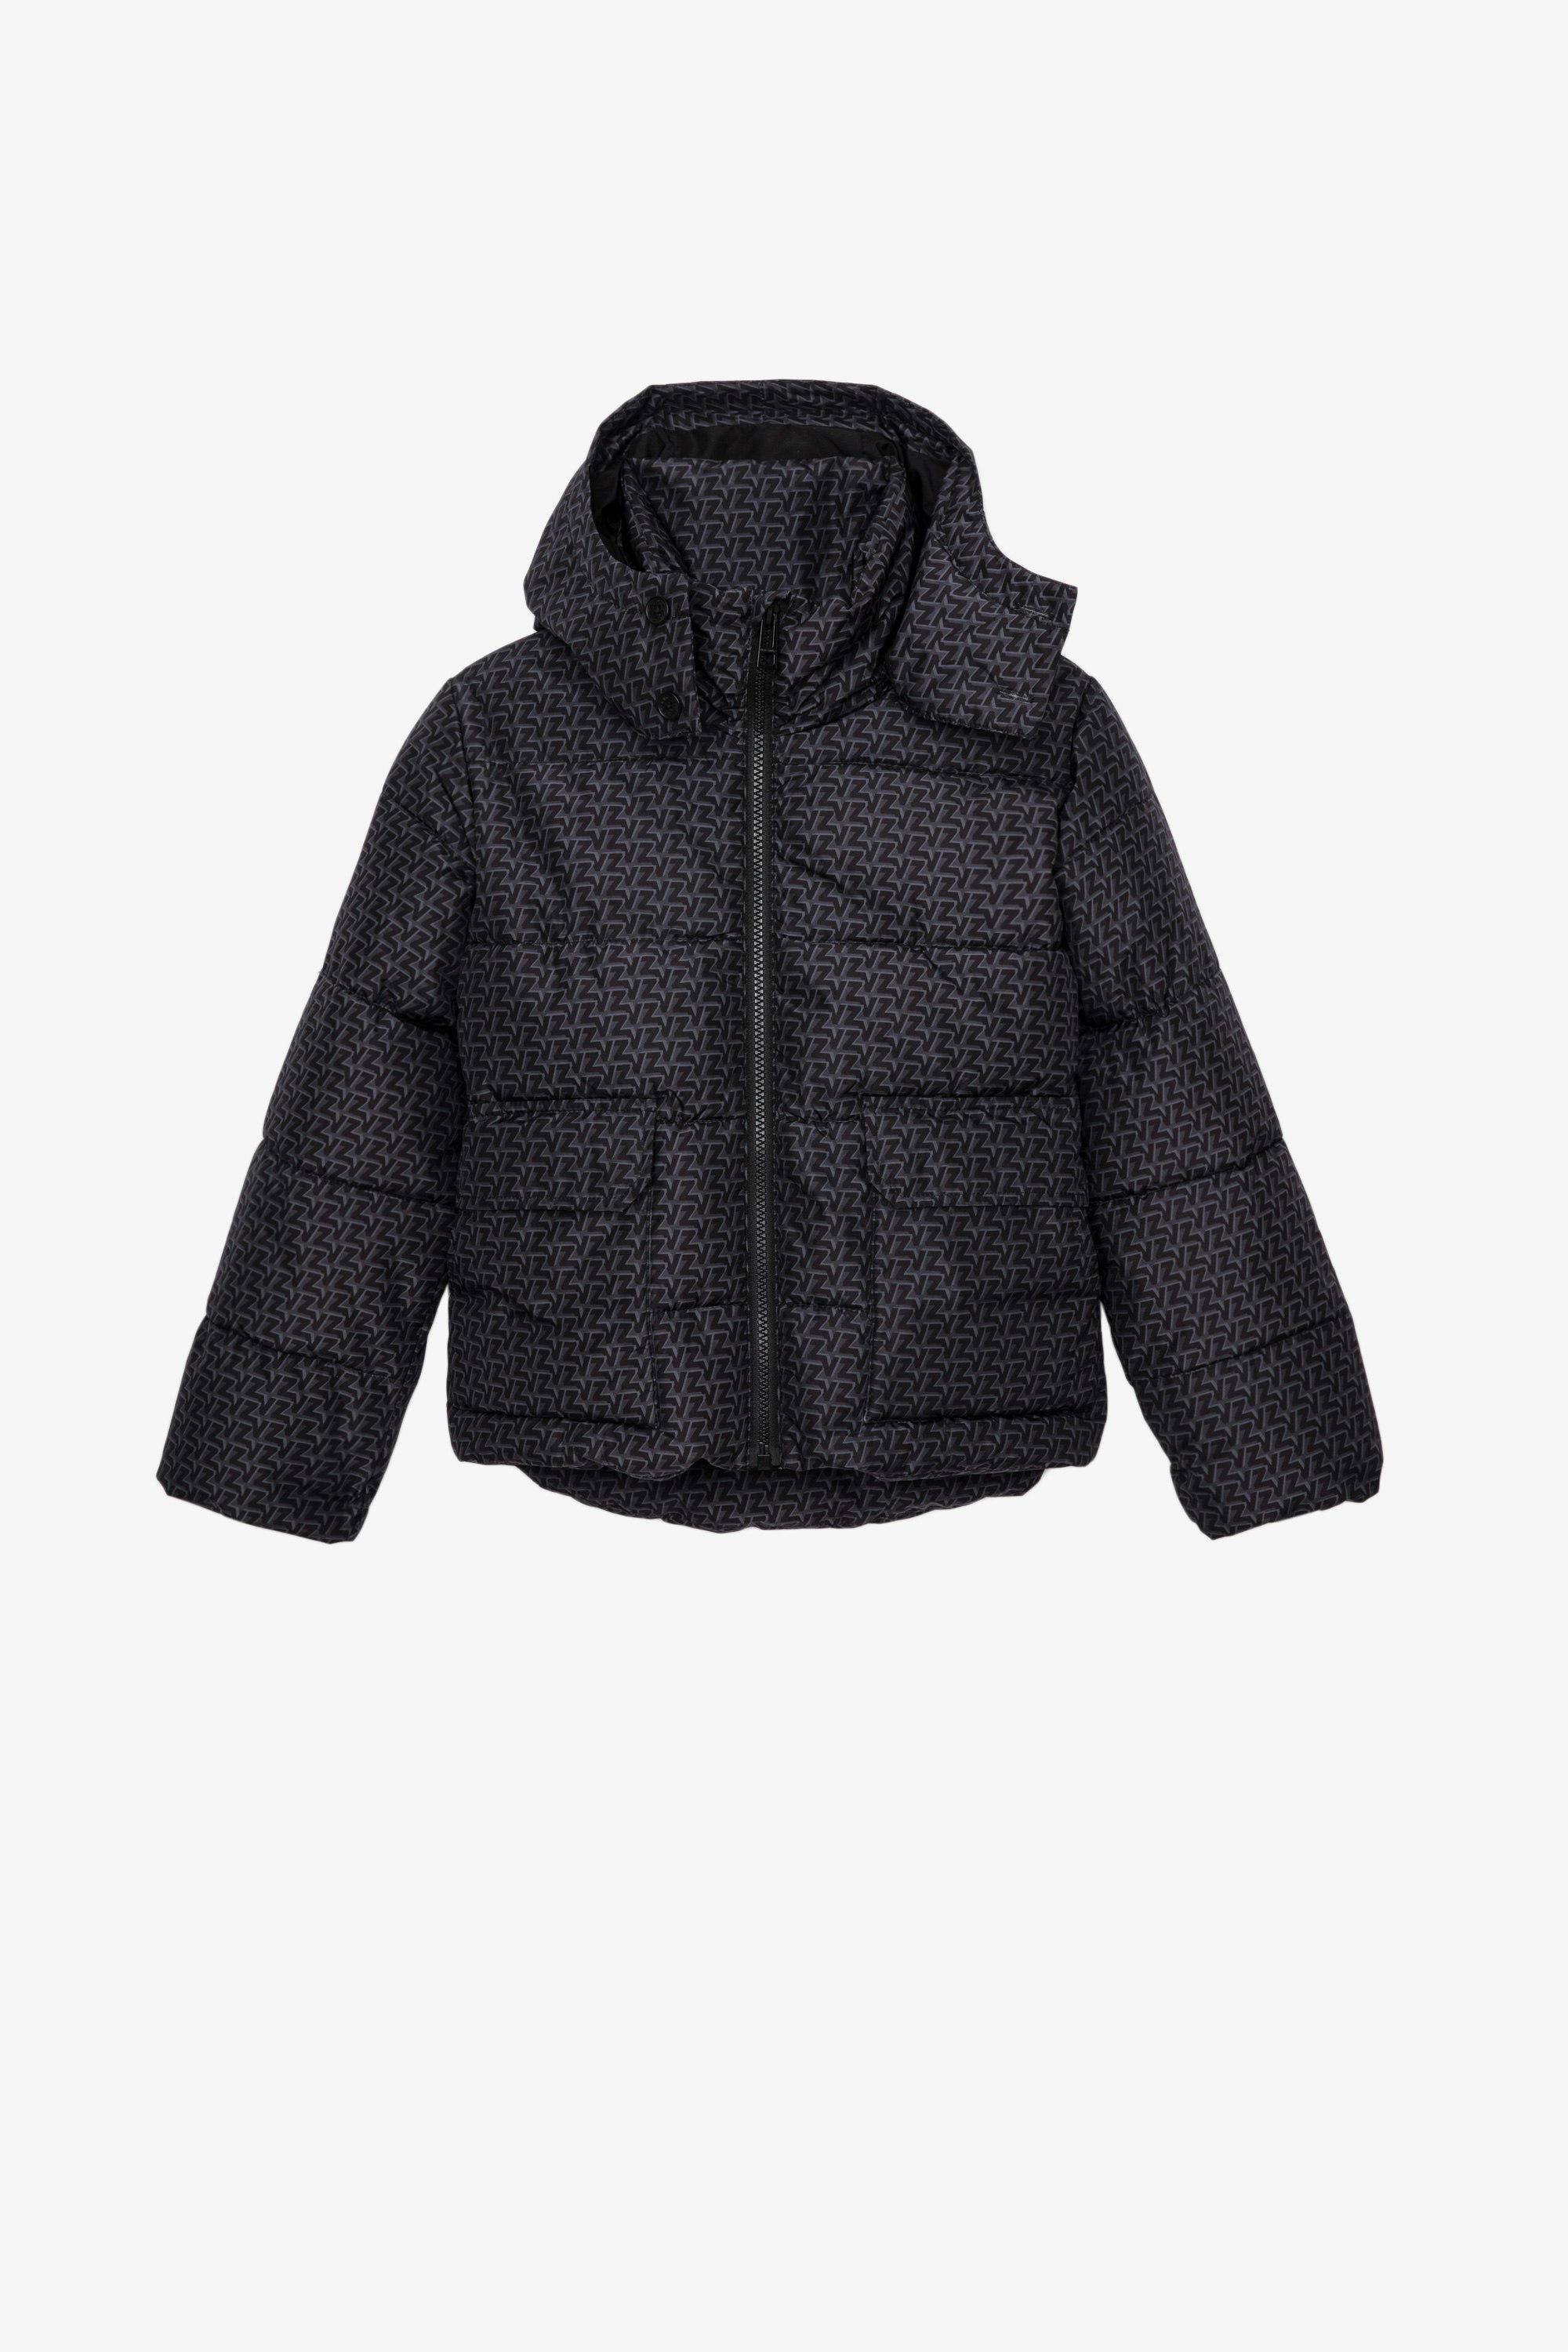 June Children’s Puffer ジャケット Children’s black puffer jacket with removable hood 